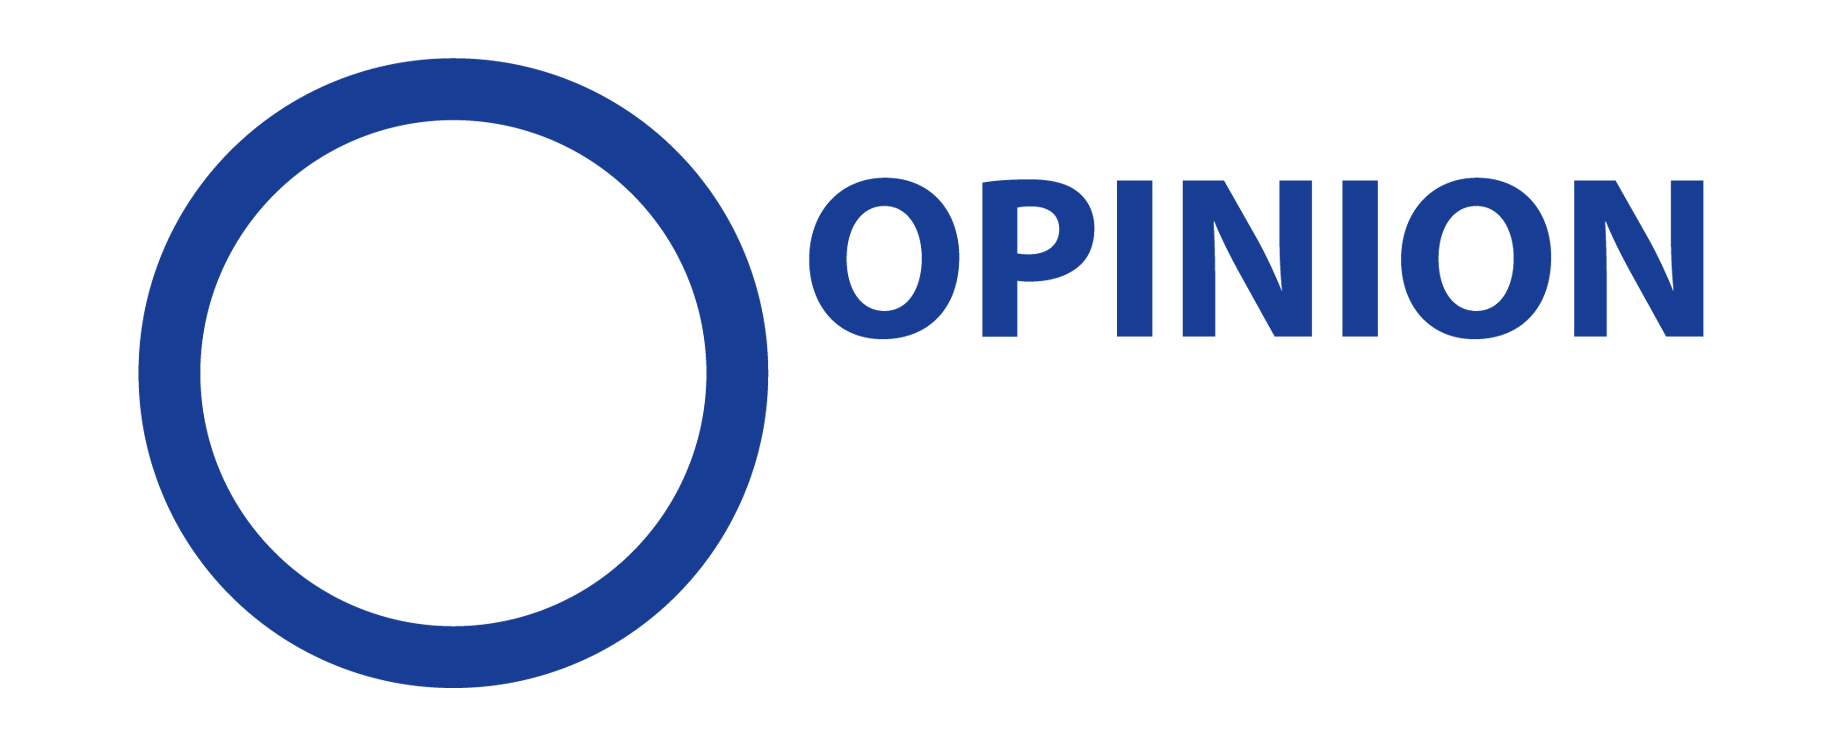 Opinion Capital